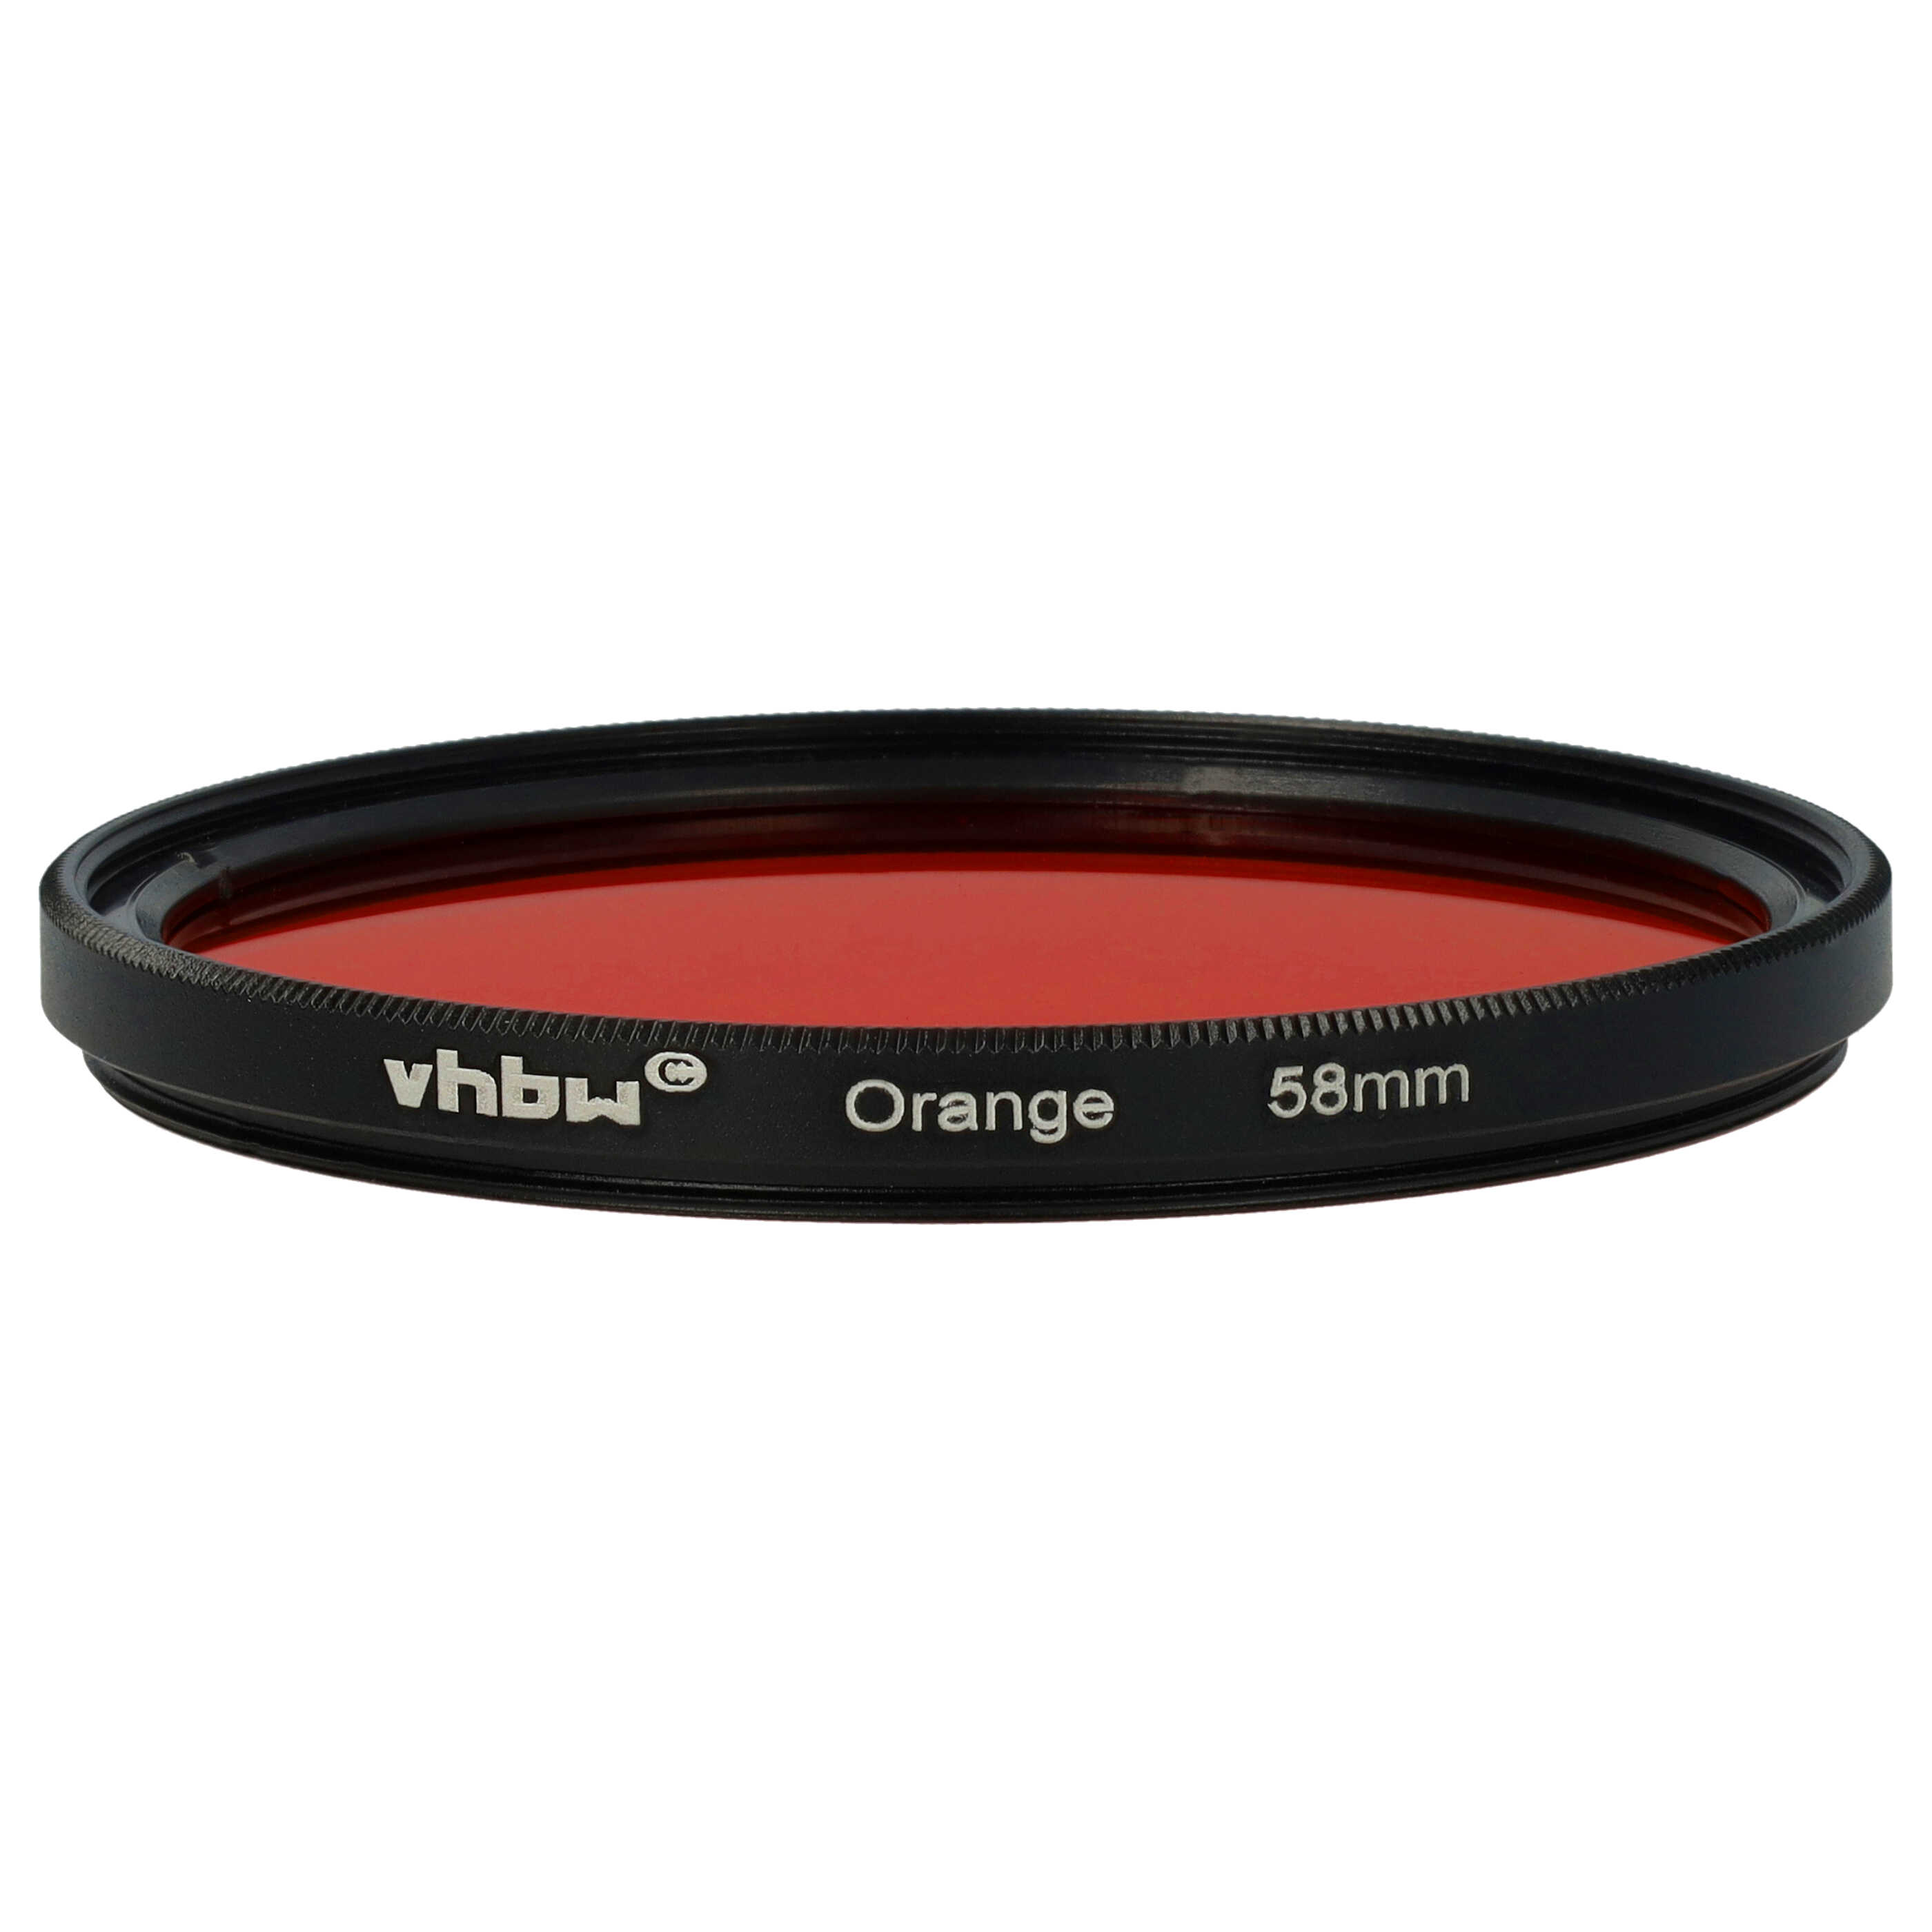 Coloured Filter, Orange suitable for Camera Lenses with 58 mm Filter Thread - Orange Filter